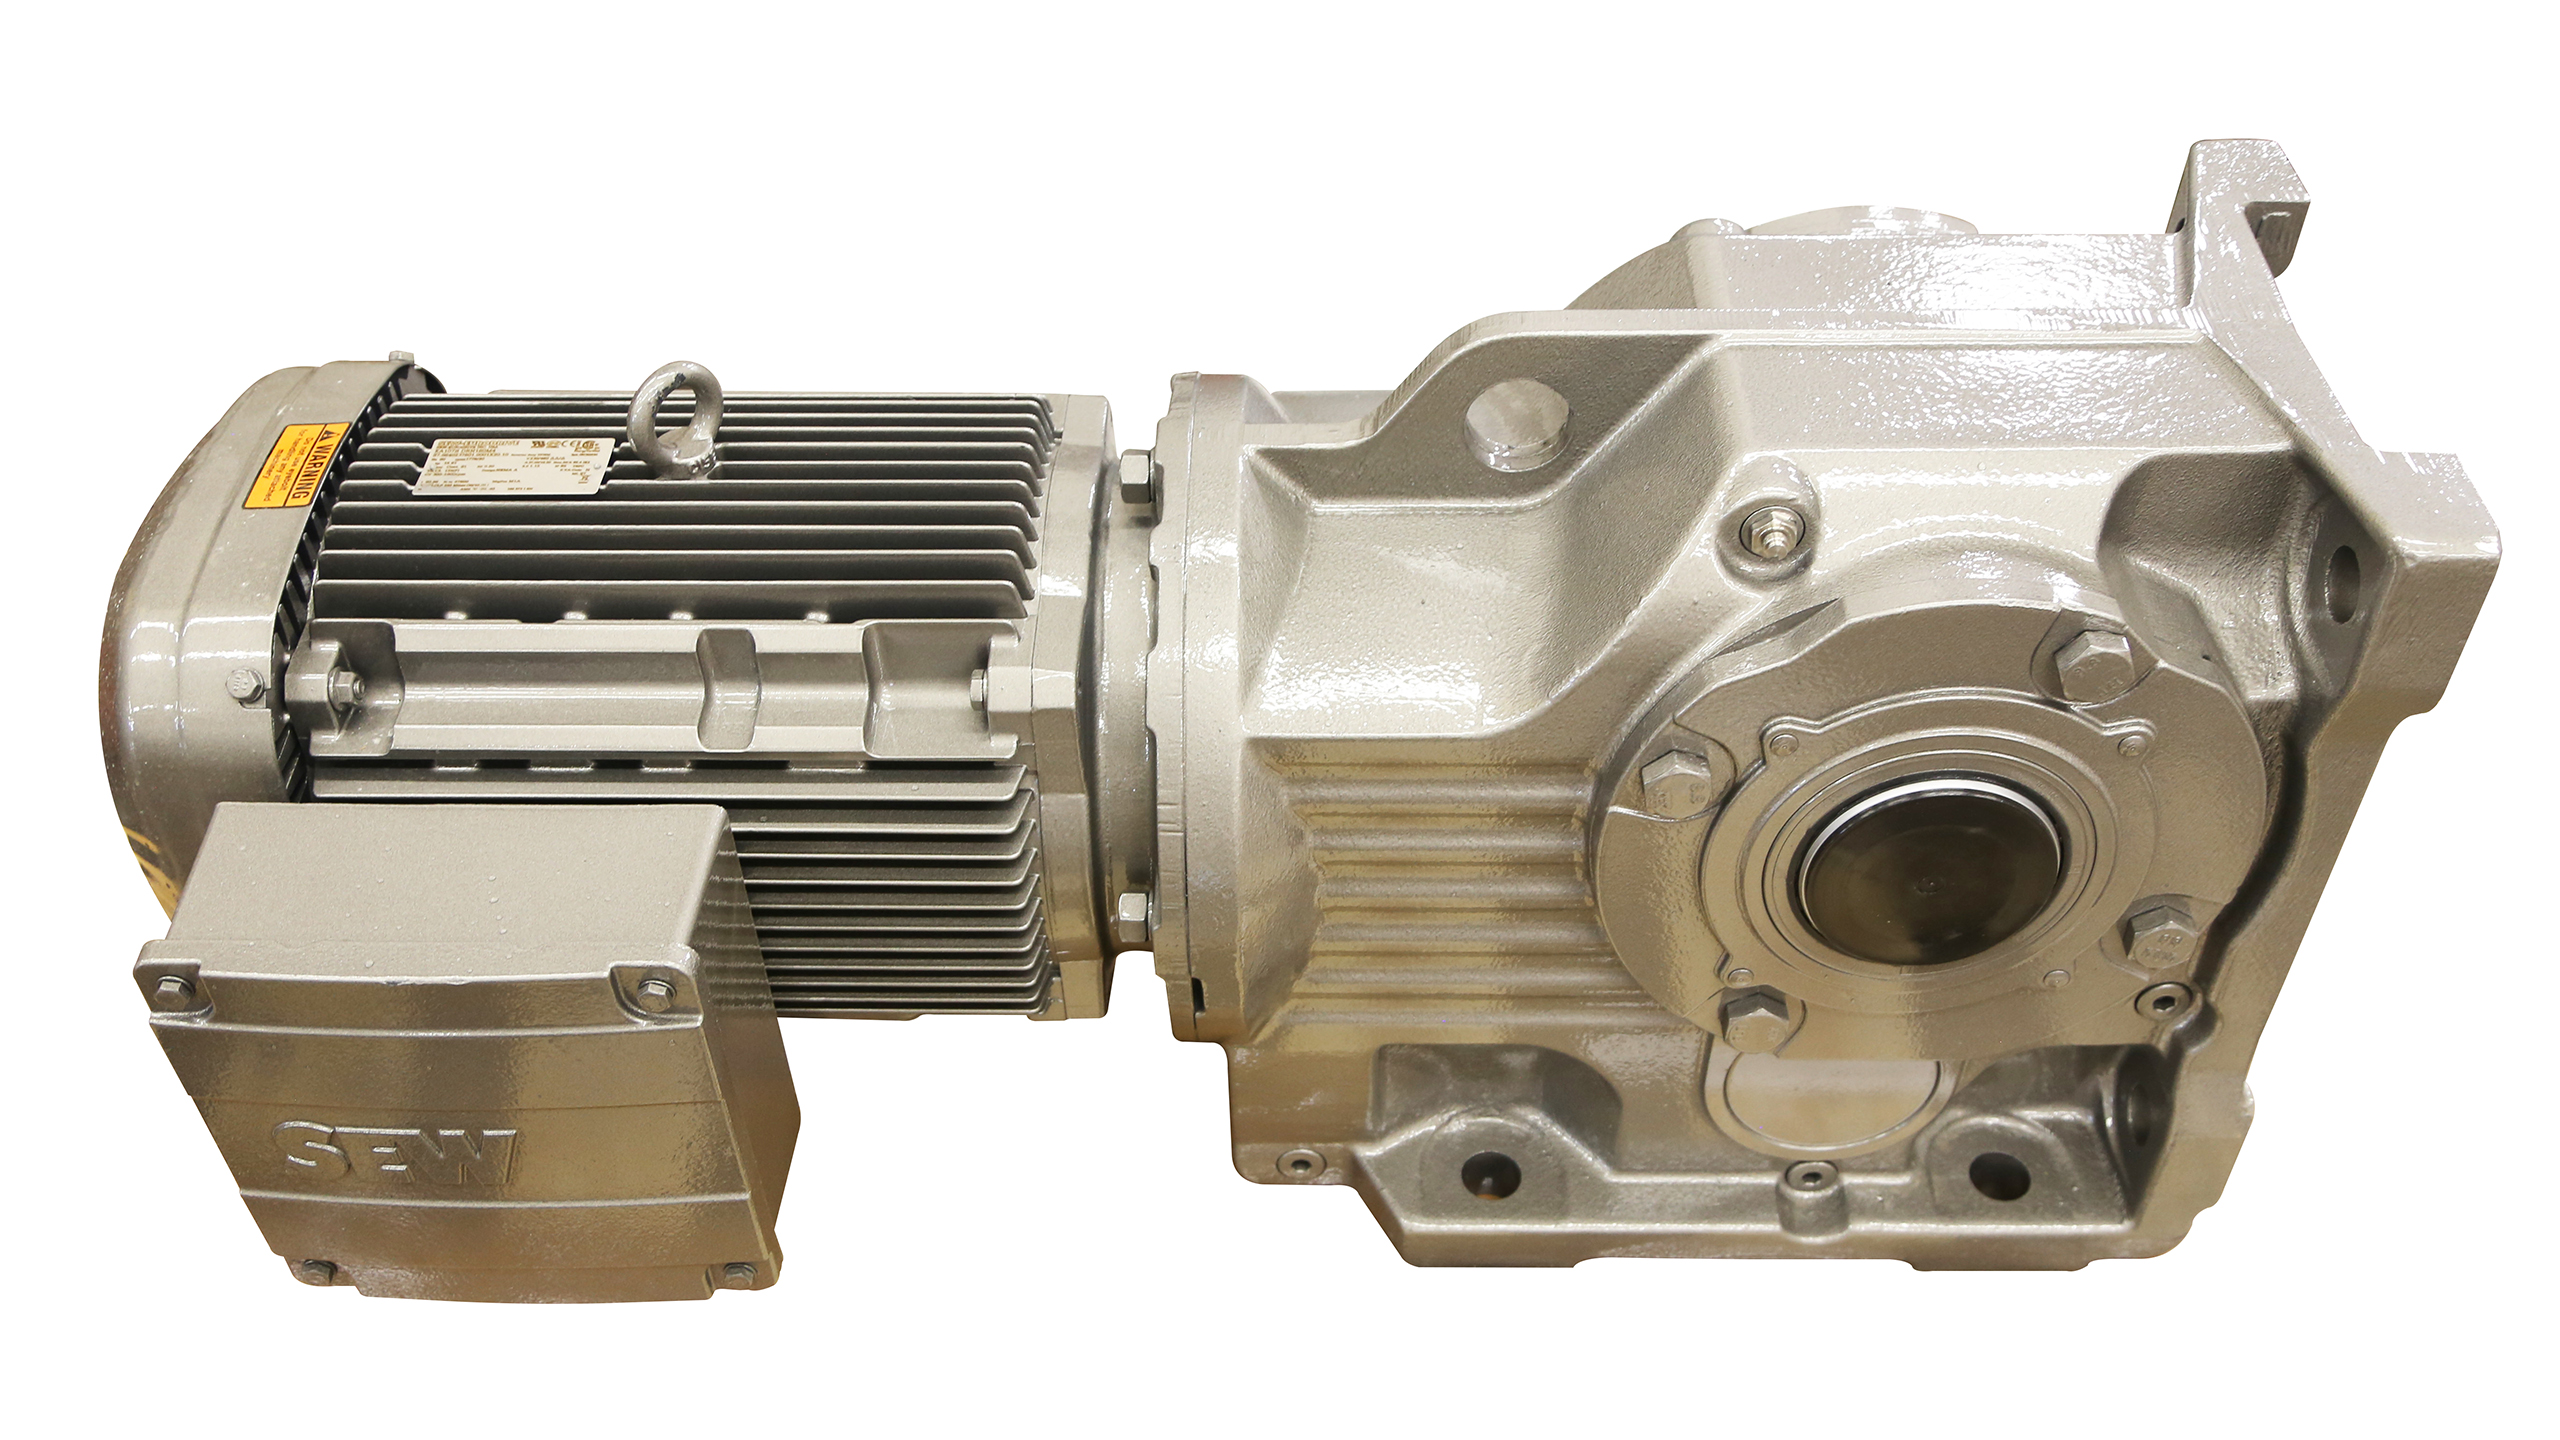 Gearmotor, Belt Conveyor Drive, SEW Eurodrive KA107BDRN160L4, 90.96 Ratio/20 rpm (Gray)